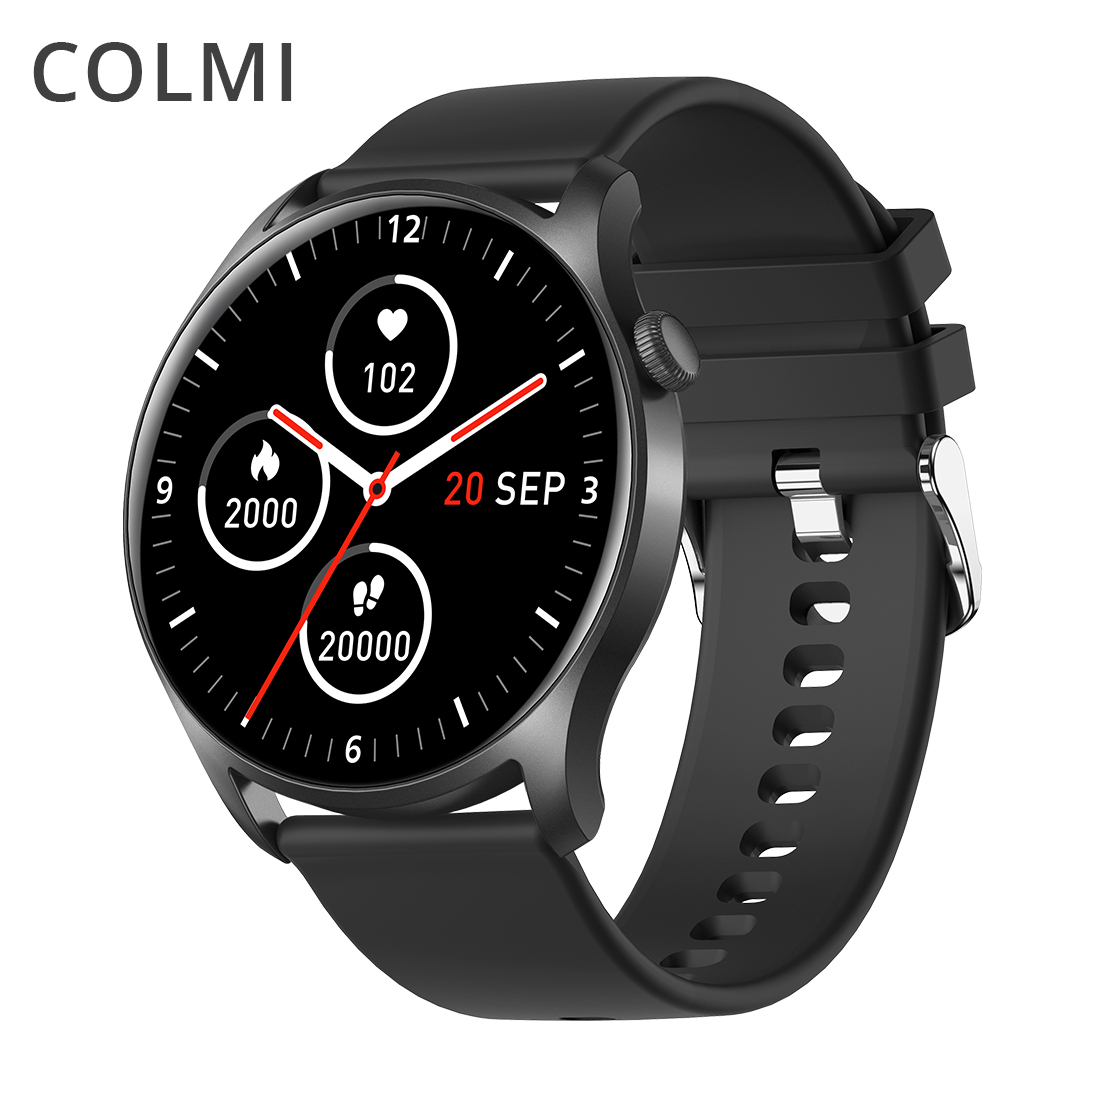 COLMI SKY 8 Smart Watch Women IP67 Waterproof Bluetooth Smartwatch Lehilahy ho an'ny Android i (4)